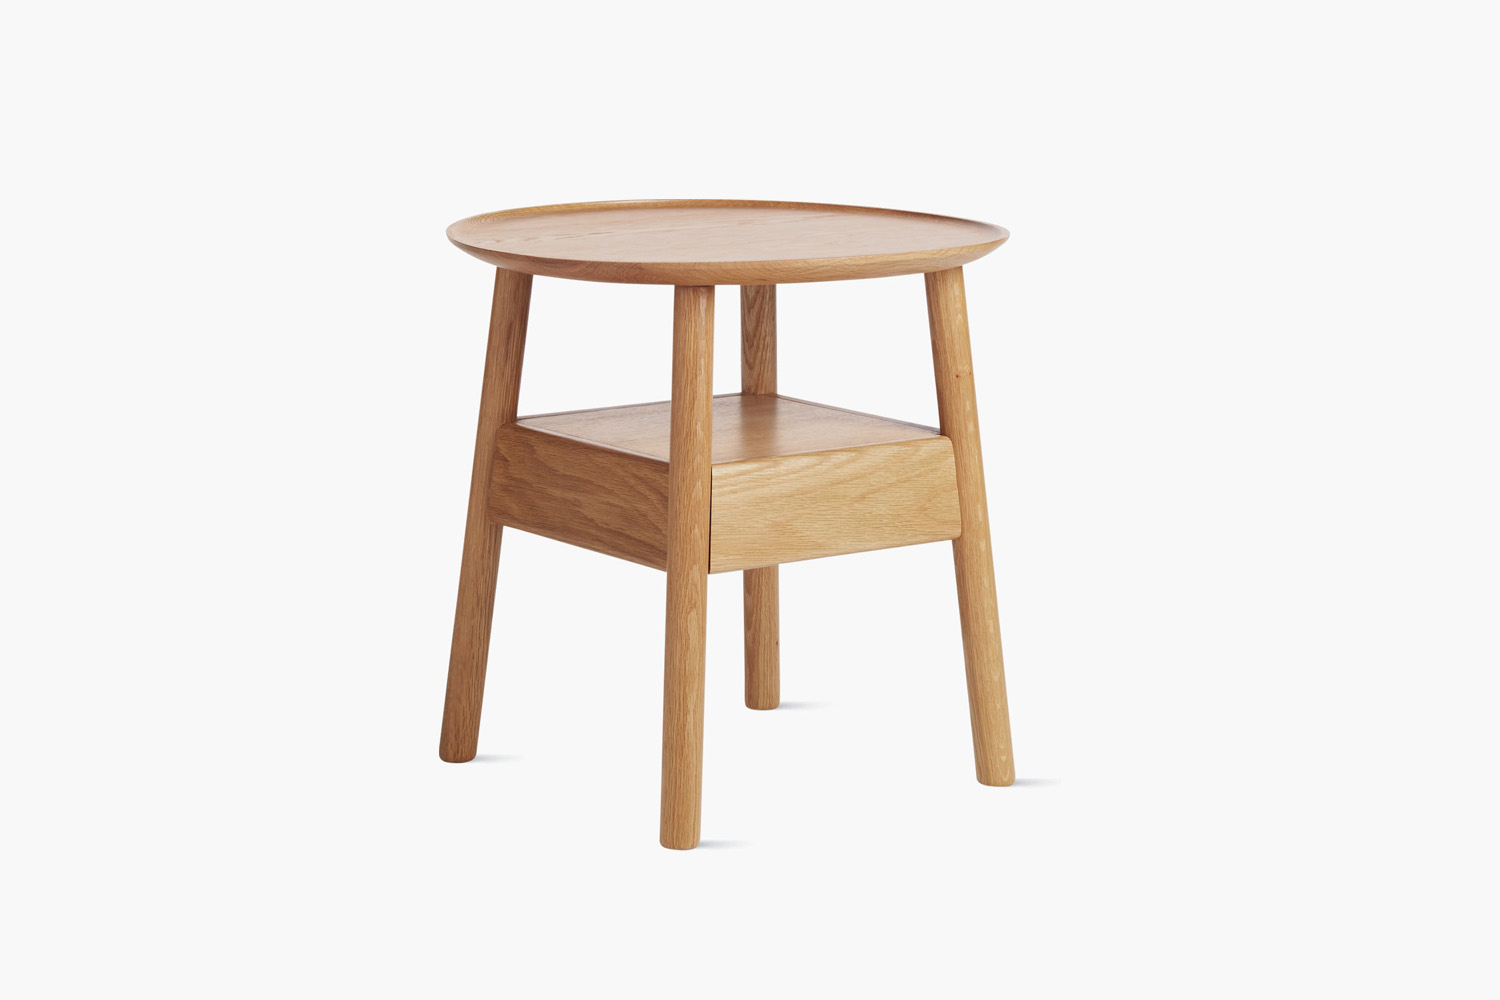 the edge bedside table in oak or walnut is designed by gabriel tan for design w 9